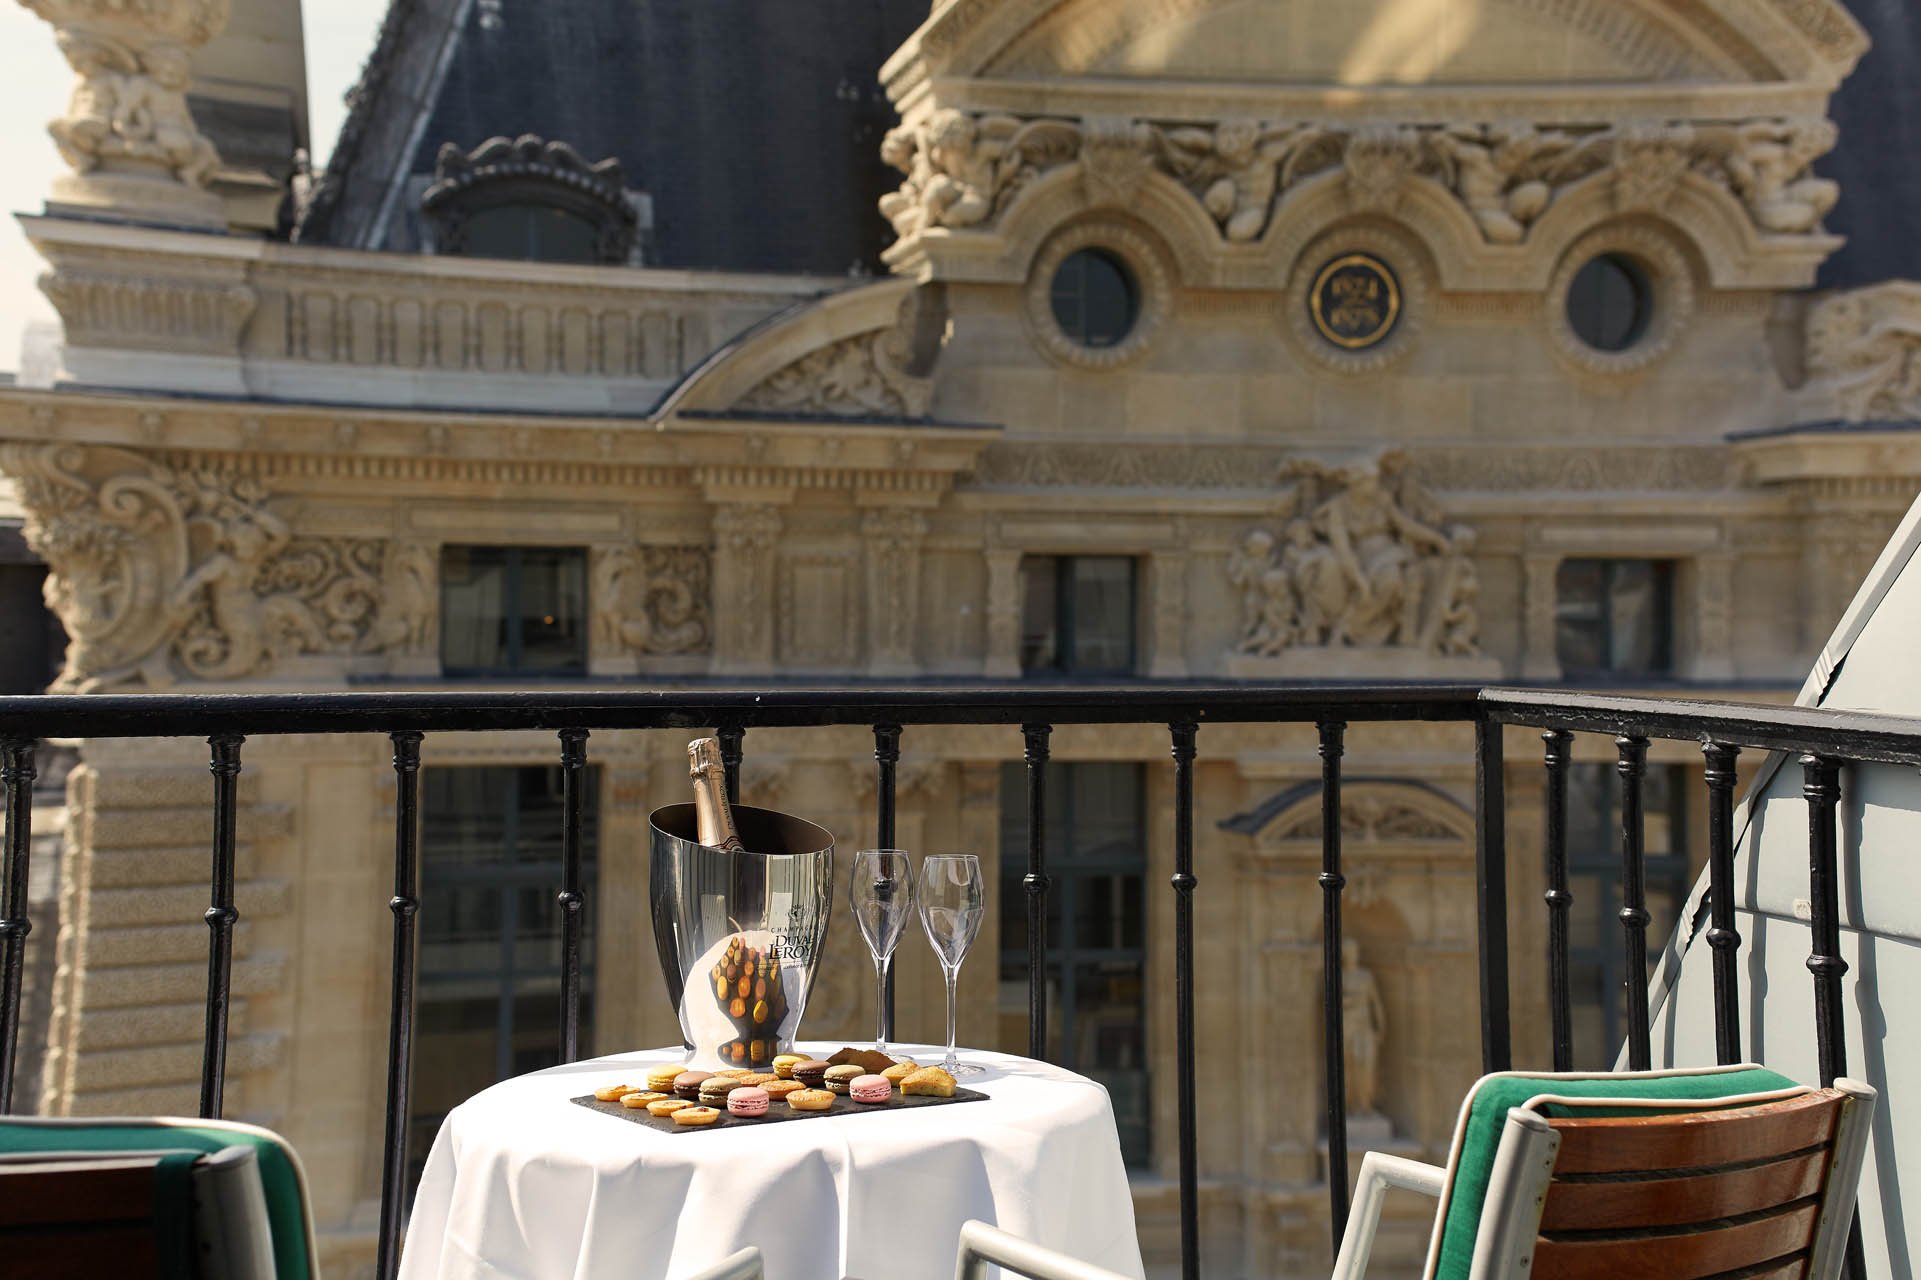 Regina Louvre Hotel - Parisian Suite - Balcony facing Louvre Museum